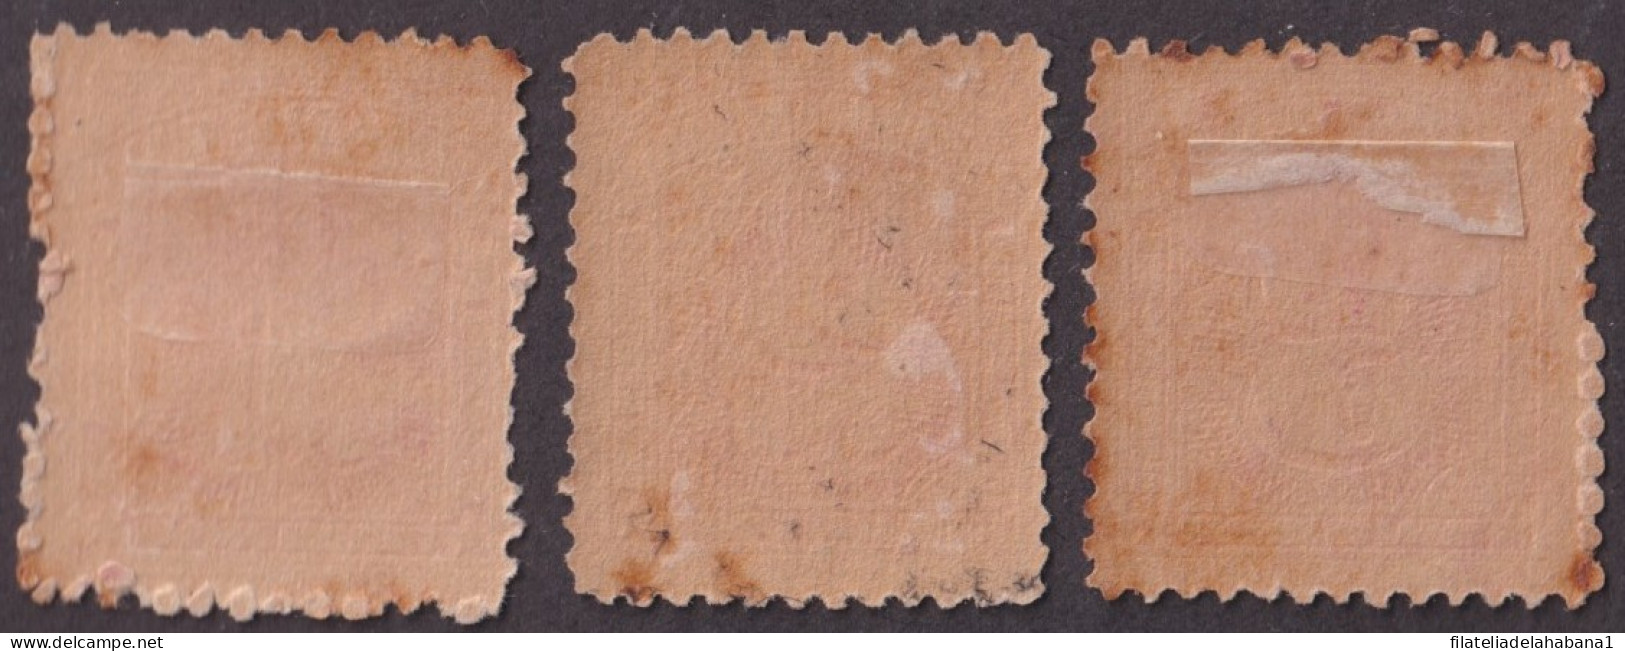 1927-78 CUBA REPUBLICA 1927 MH POSTAGE DUE TASA POR PAGAR COMPLETE SET.  - Unused Stamps